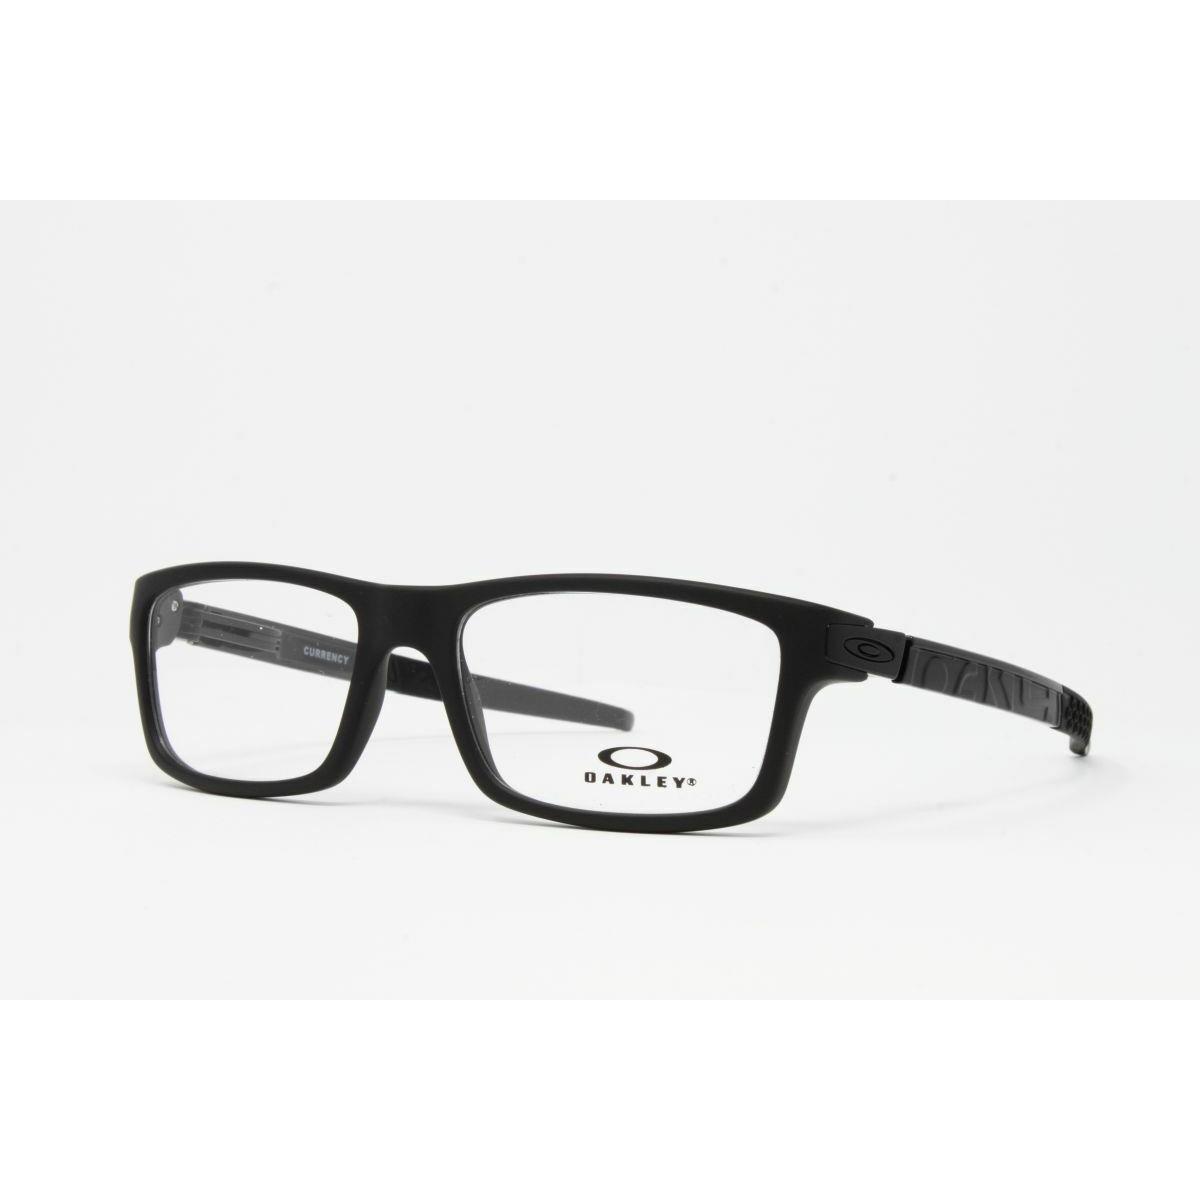 Oakley Optical Currency OX8026 01 Satin Black Eyeglasses 54mm Frames RX